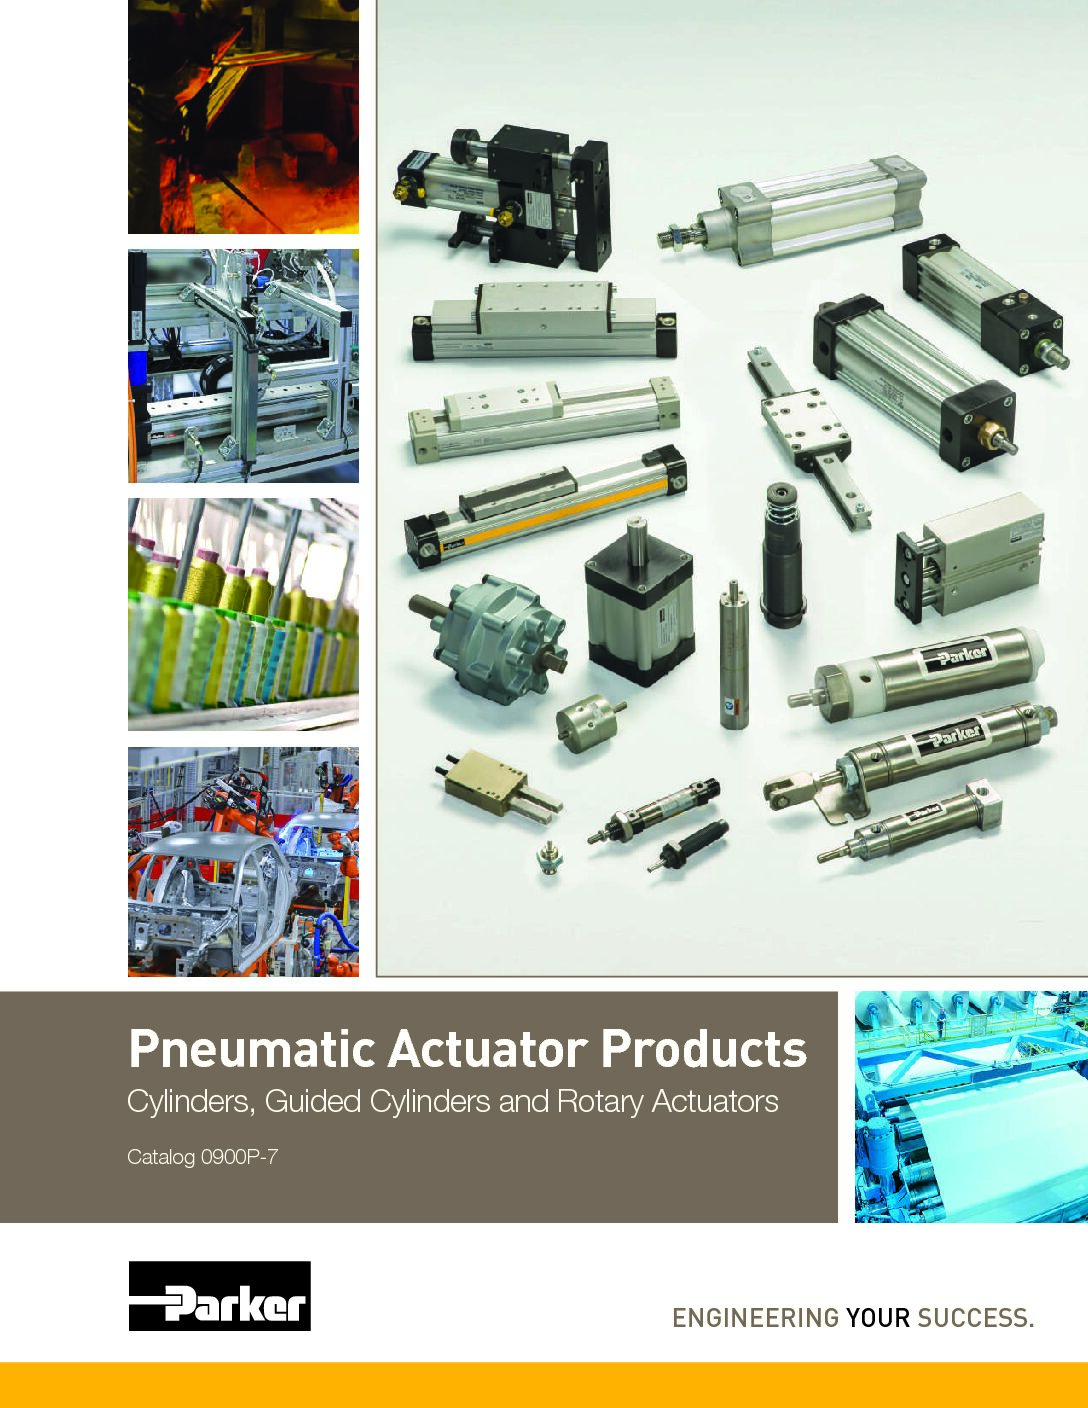 Parker Pneumatic Actuator Products